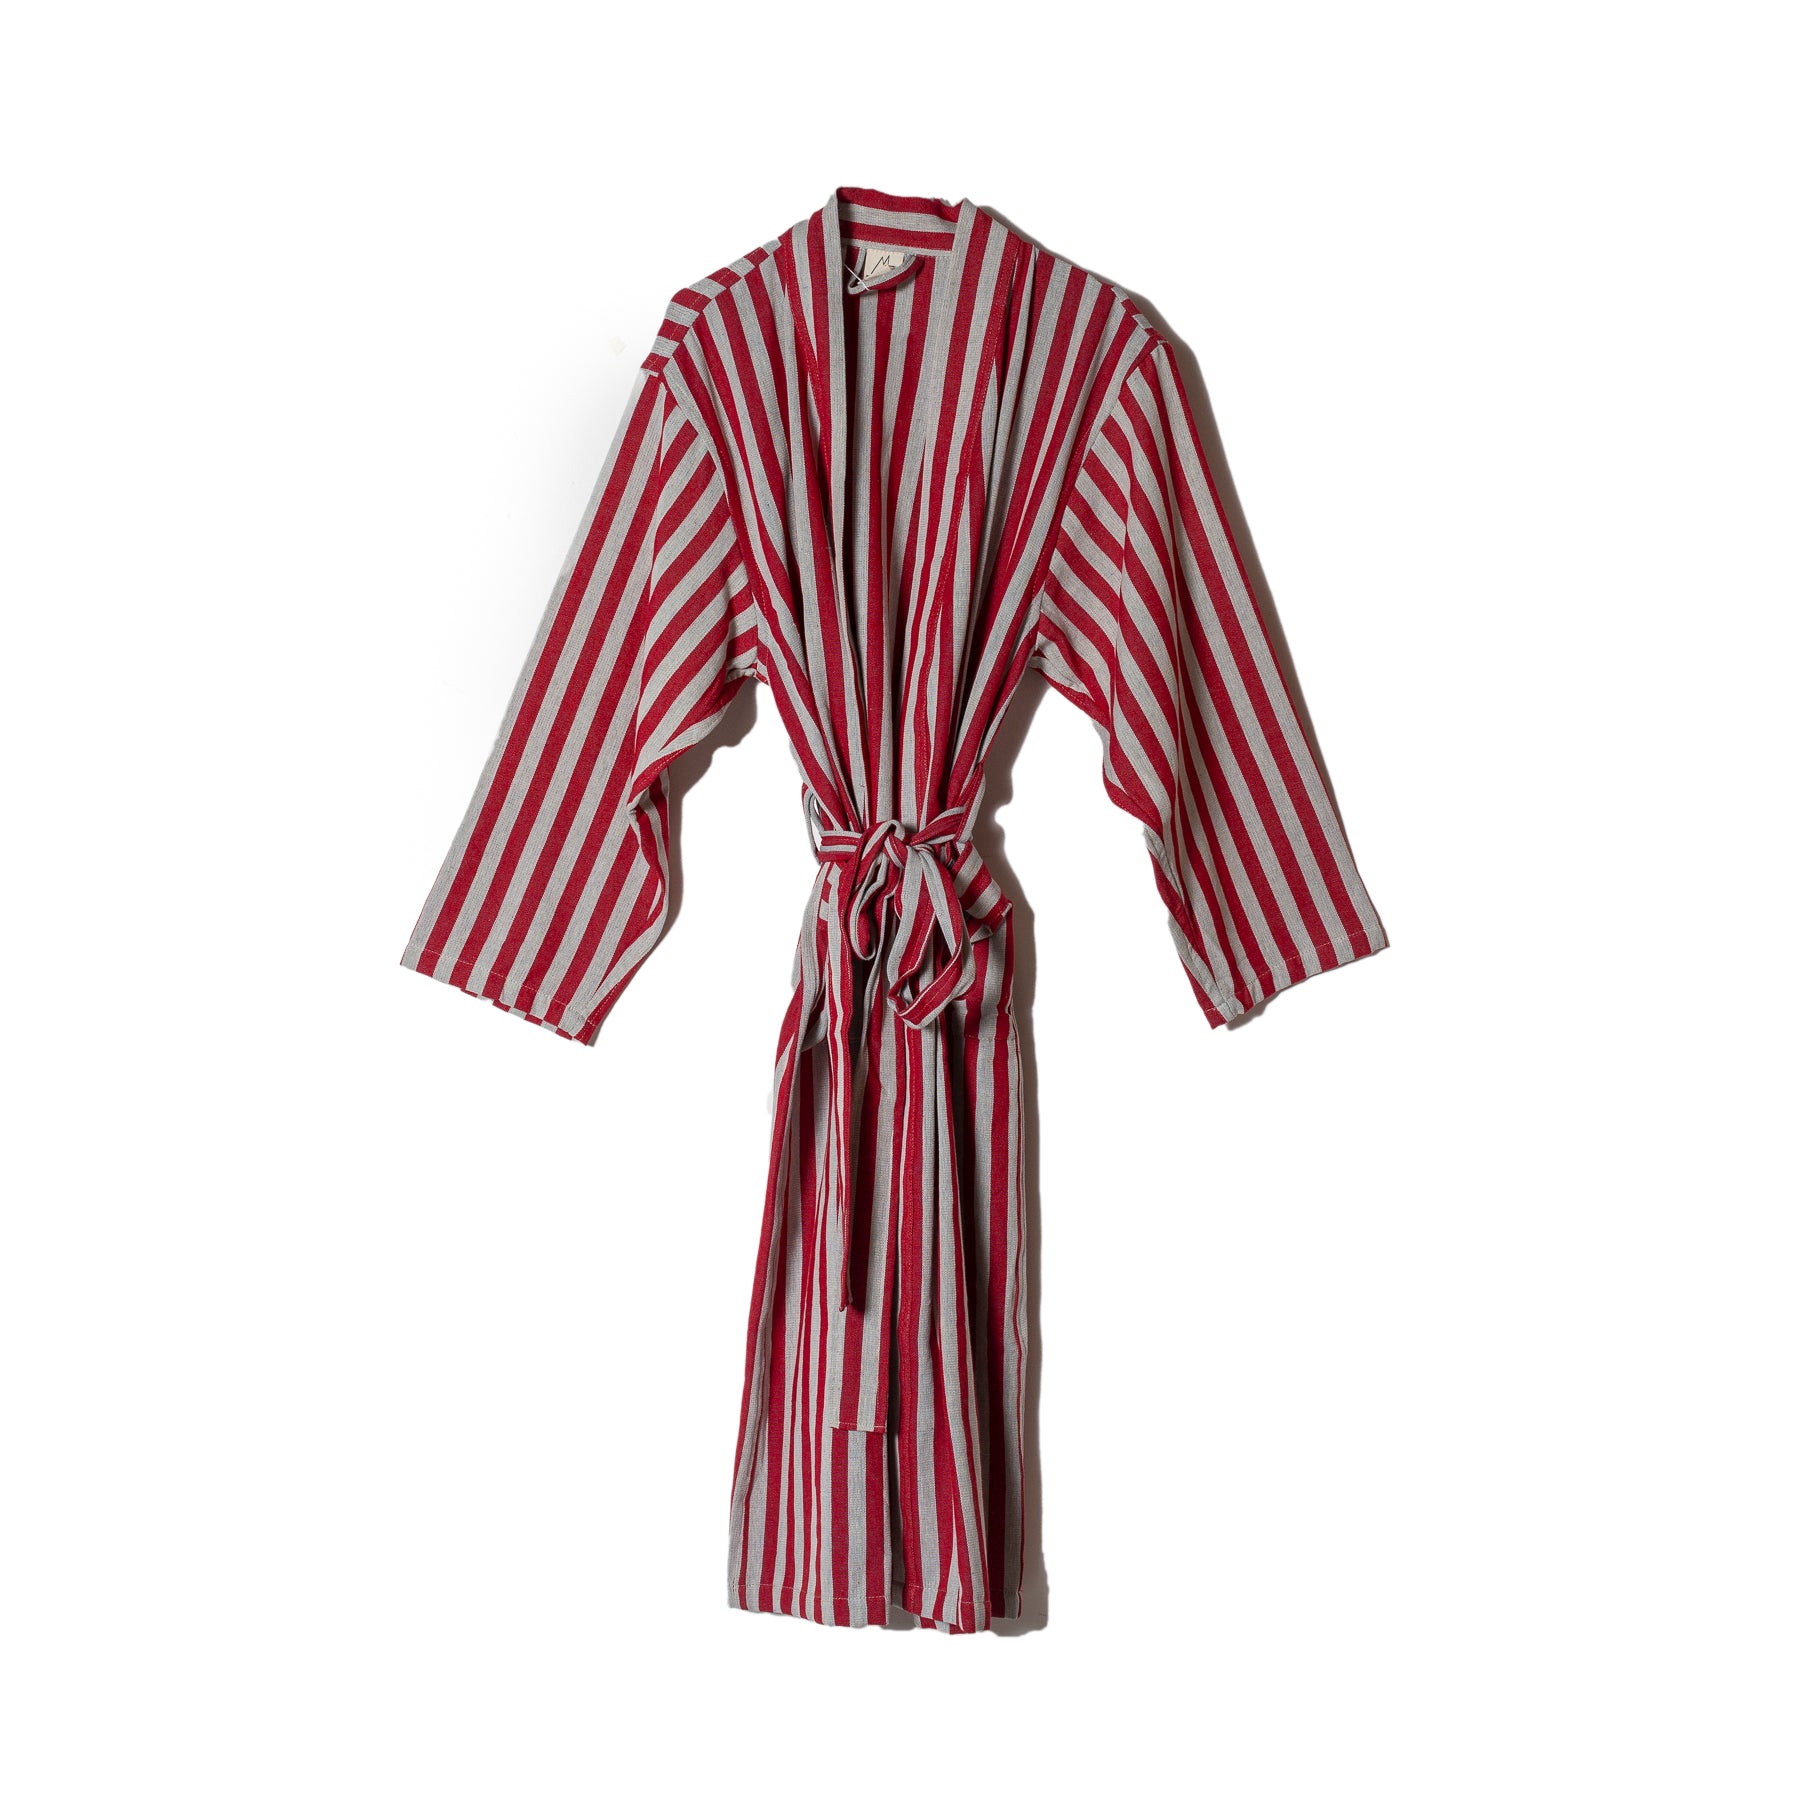 Ahura Mazda Striped Robe